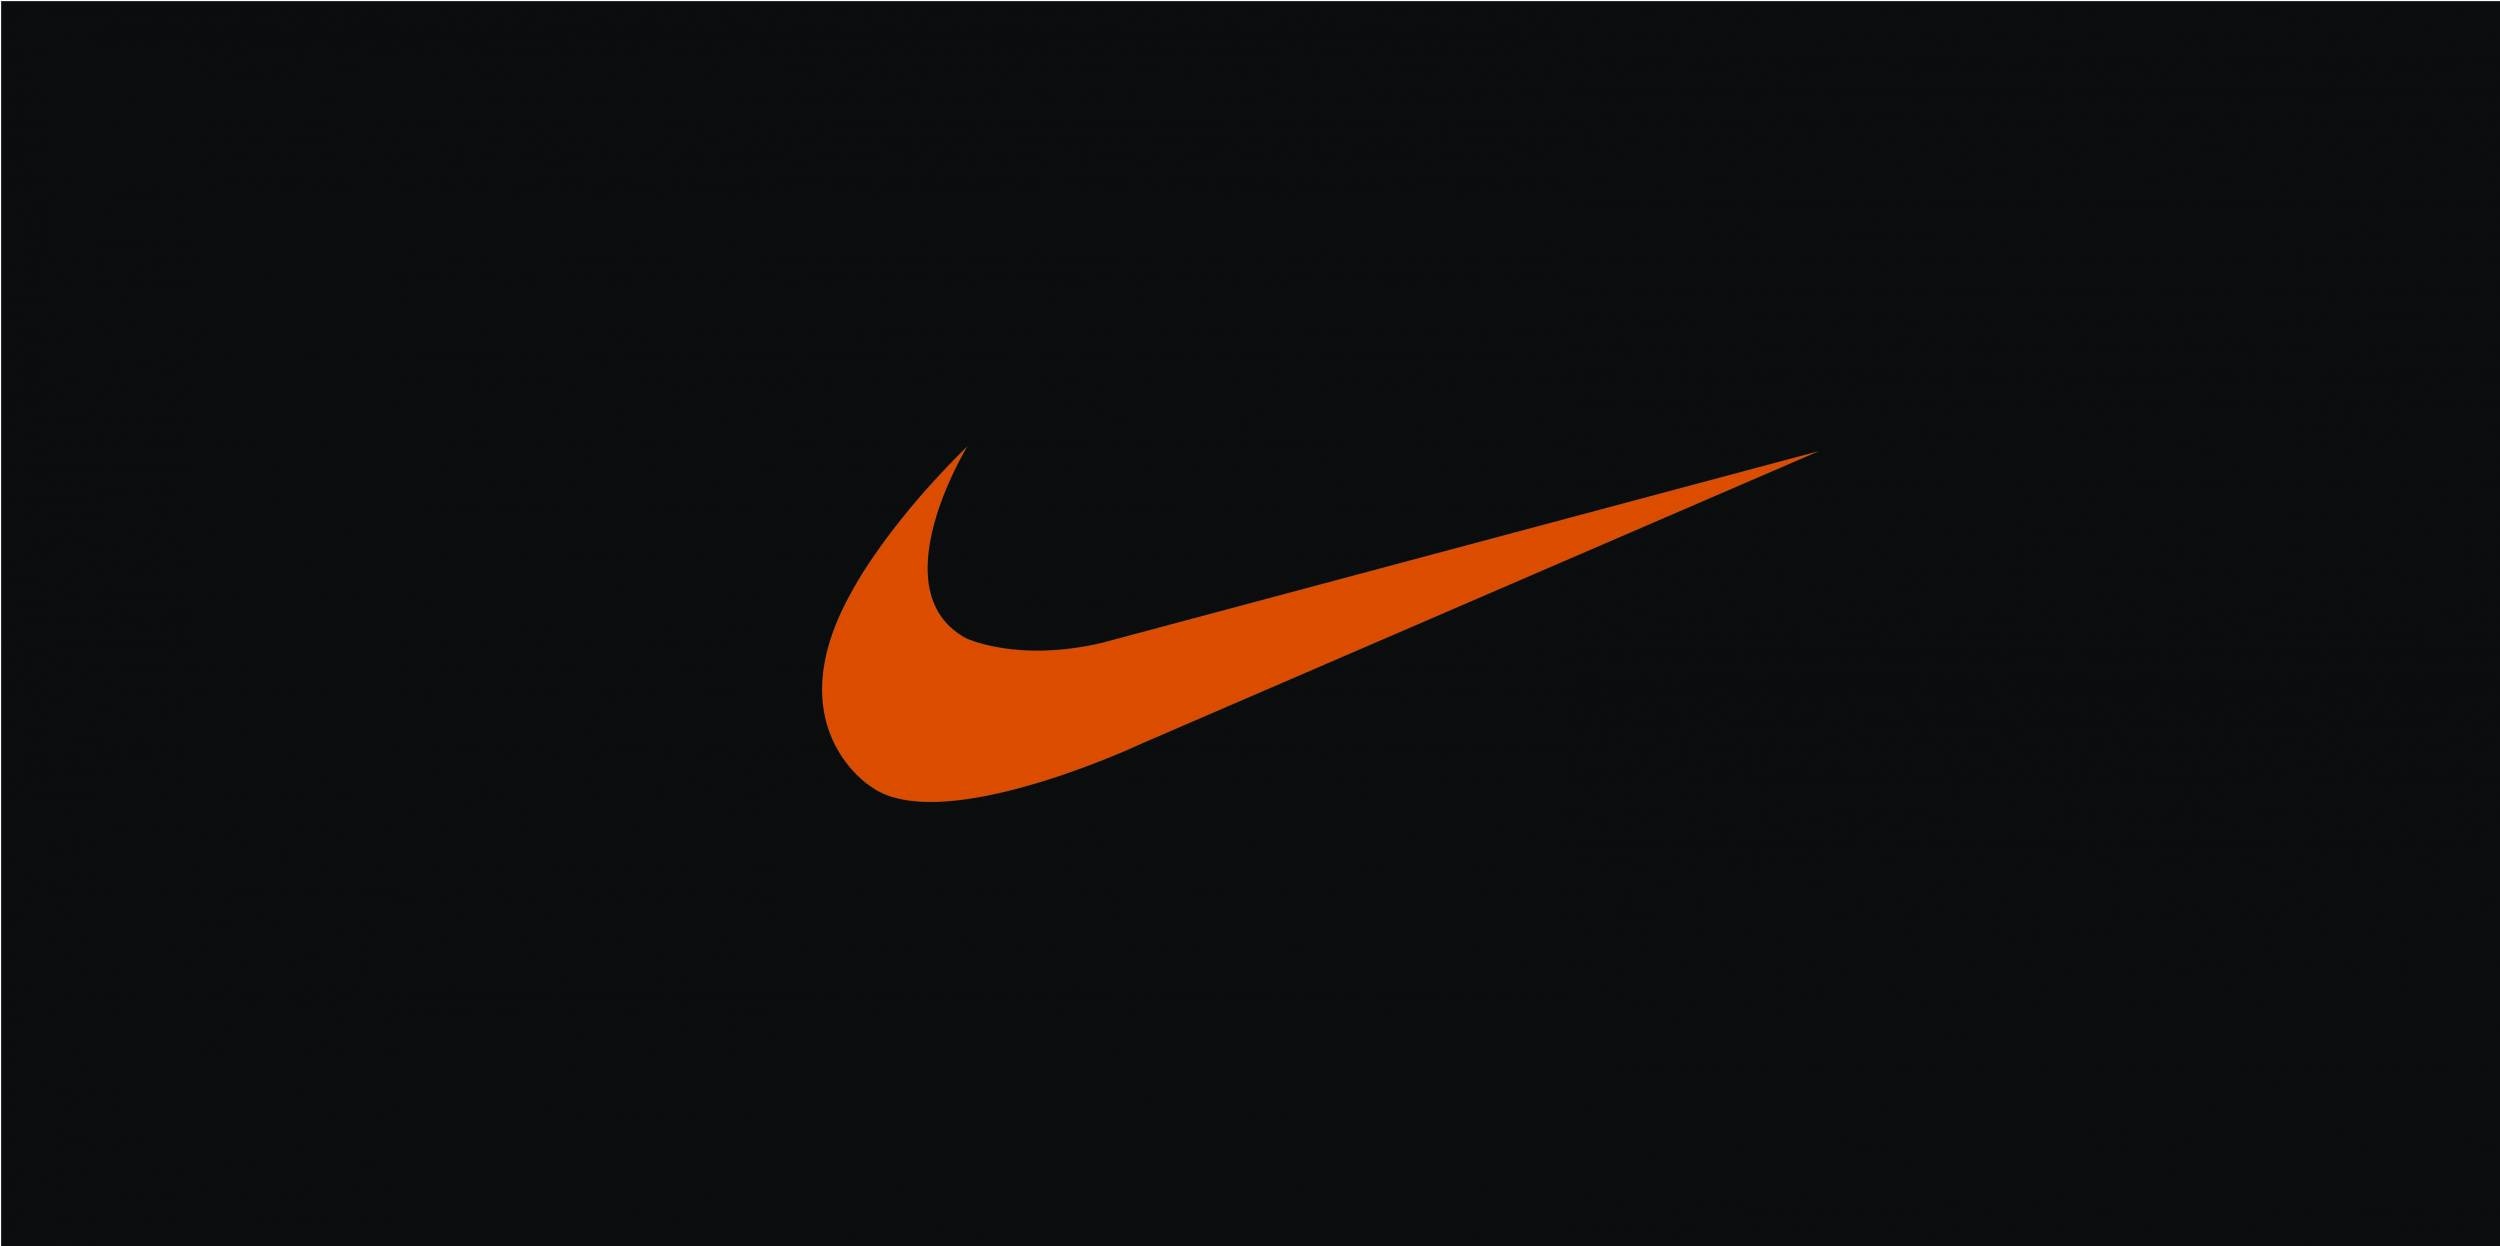 Nike logo, High-definition wallpaper, Posted by John Peltier, Sports brand, 2500x1250 Dual Screen Desktop